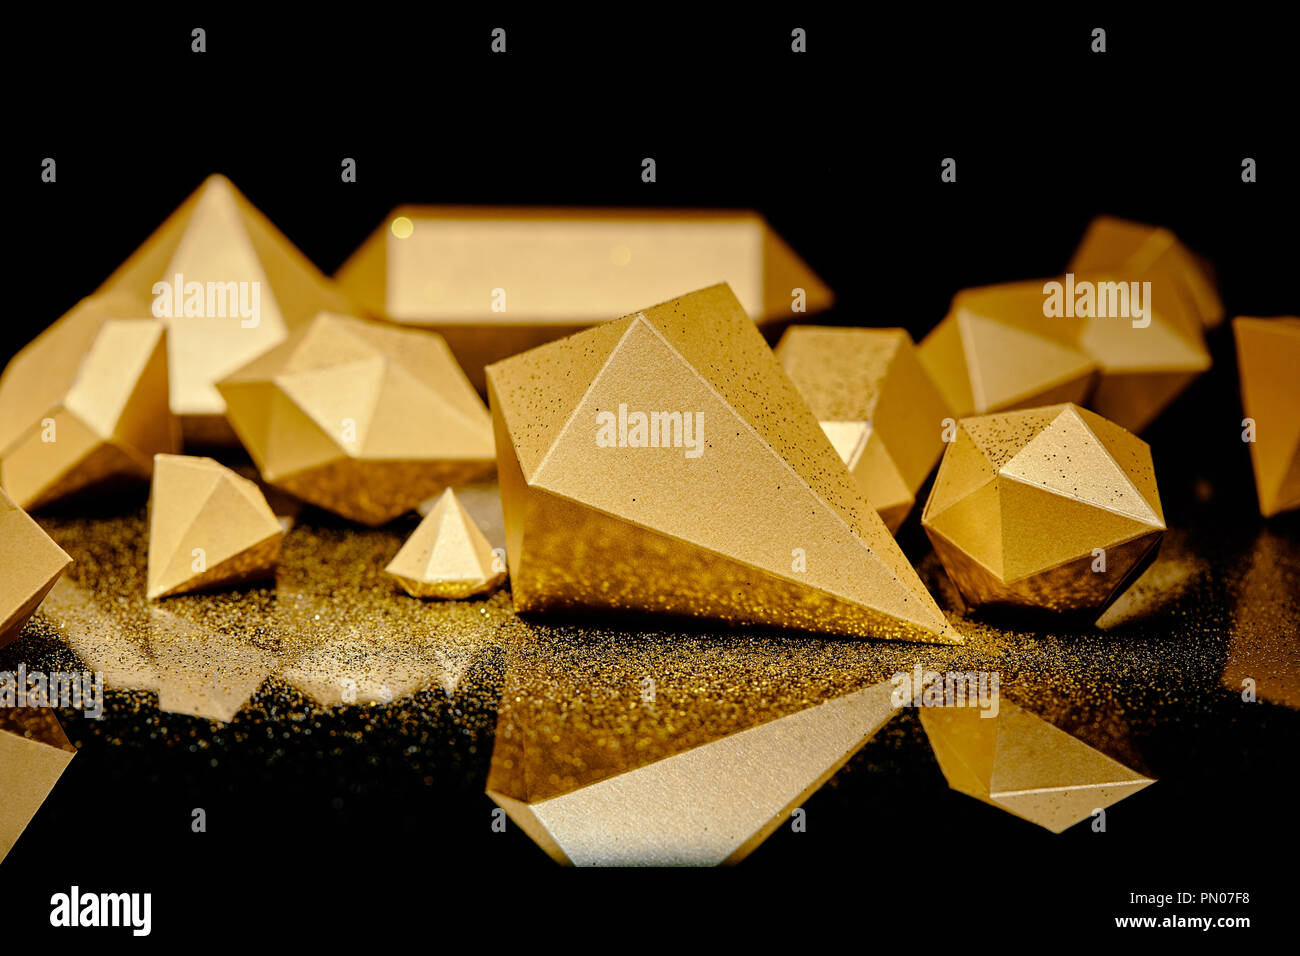 Tesoro de polvo de oro fotografías e imágenes de alta resolución - Alamy